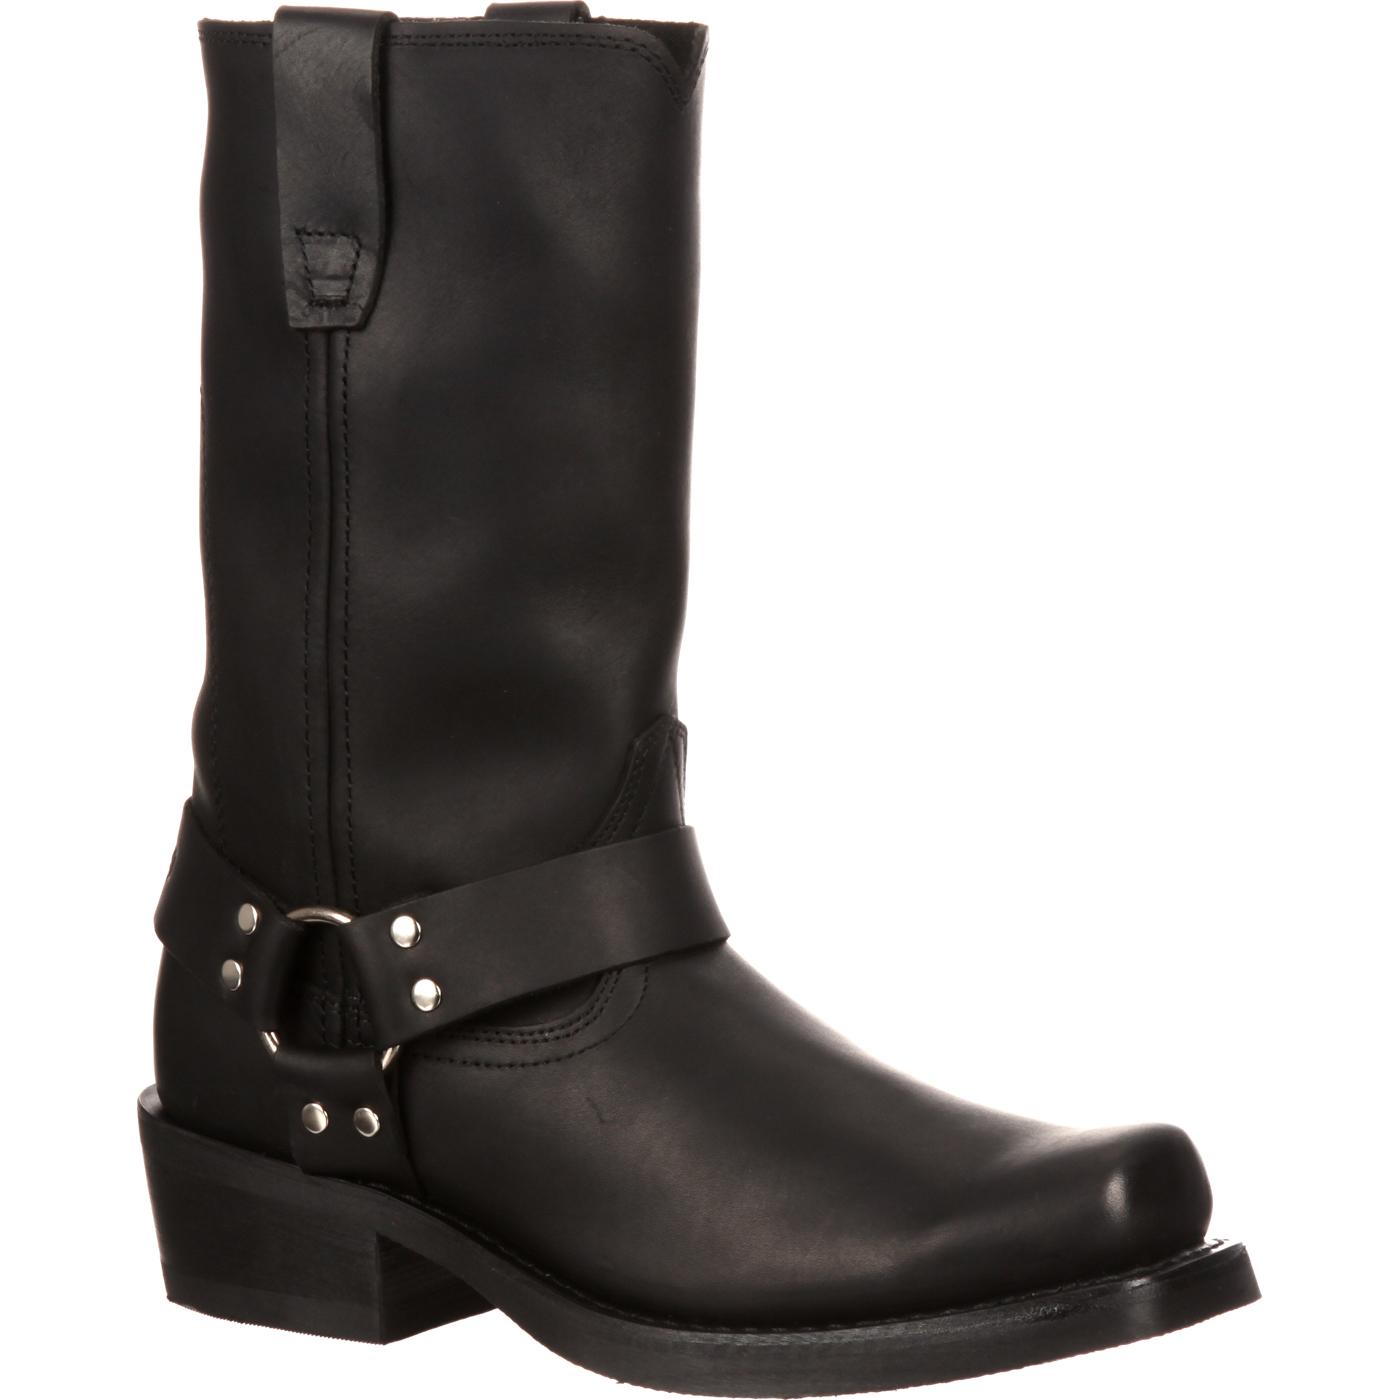 Men's 11-Inch Black Harness Boots, Durango: style DB510